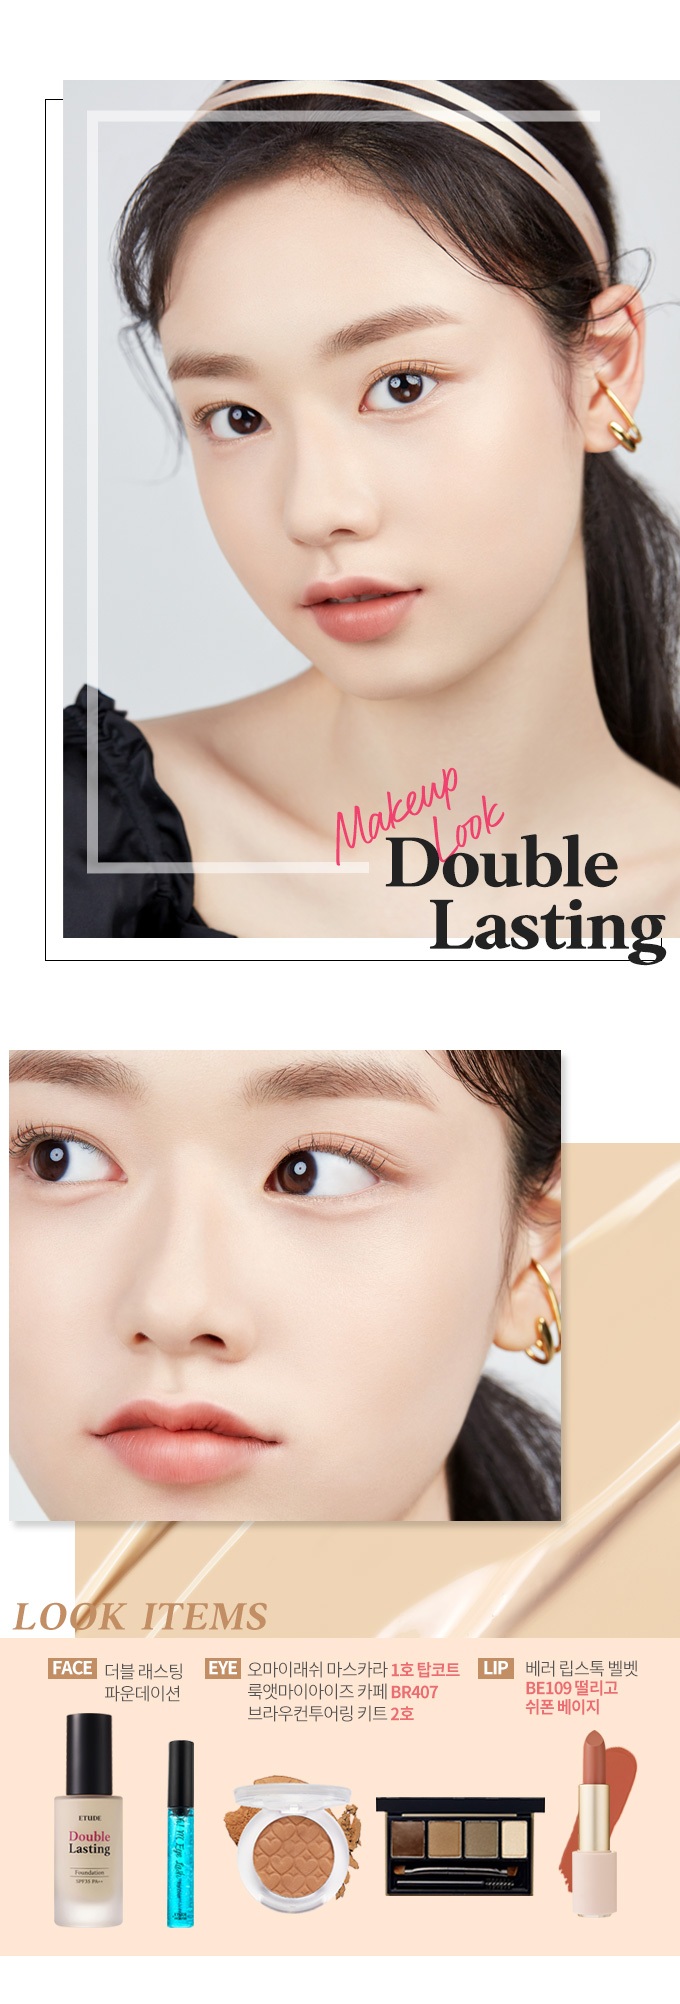 Etude House Double Lasting Foundation korean skincare product online shop malaysia China india5